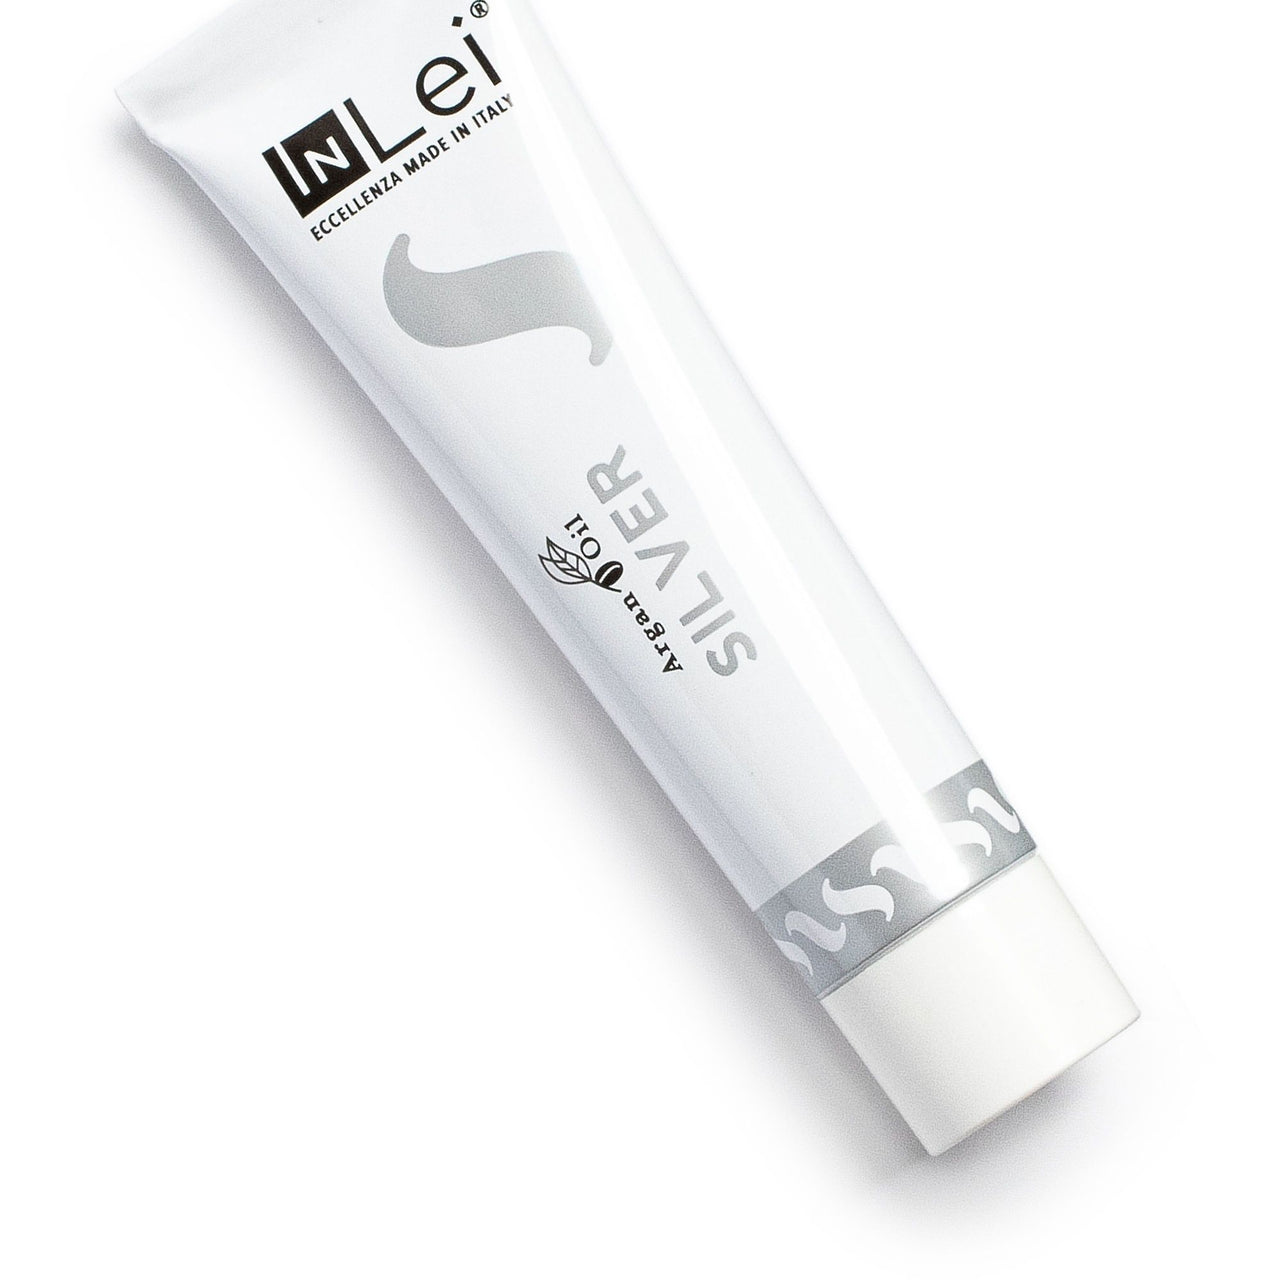 InLei® | Lash & Brow Tint | SILVER EXP 2/22